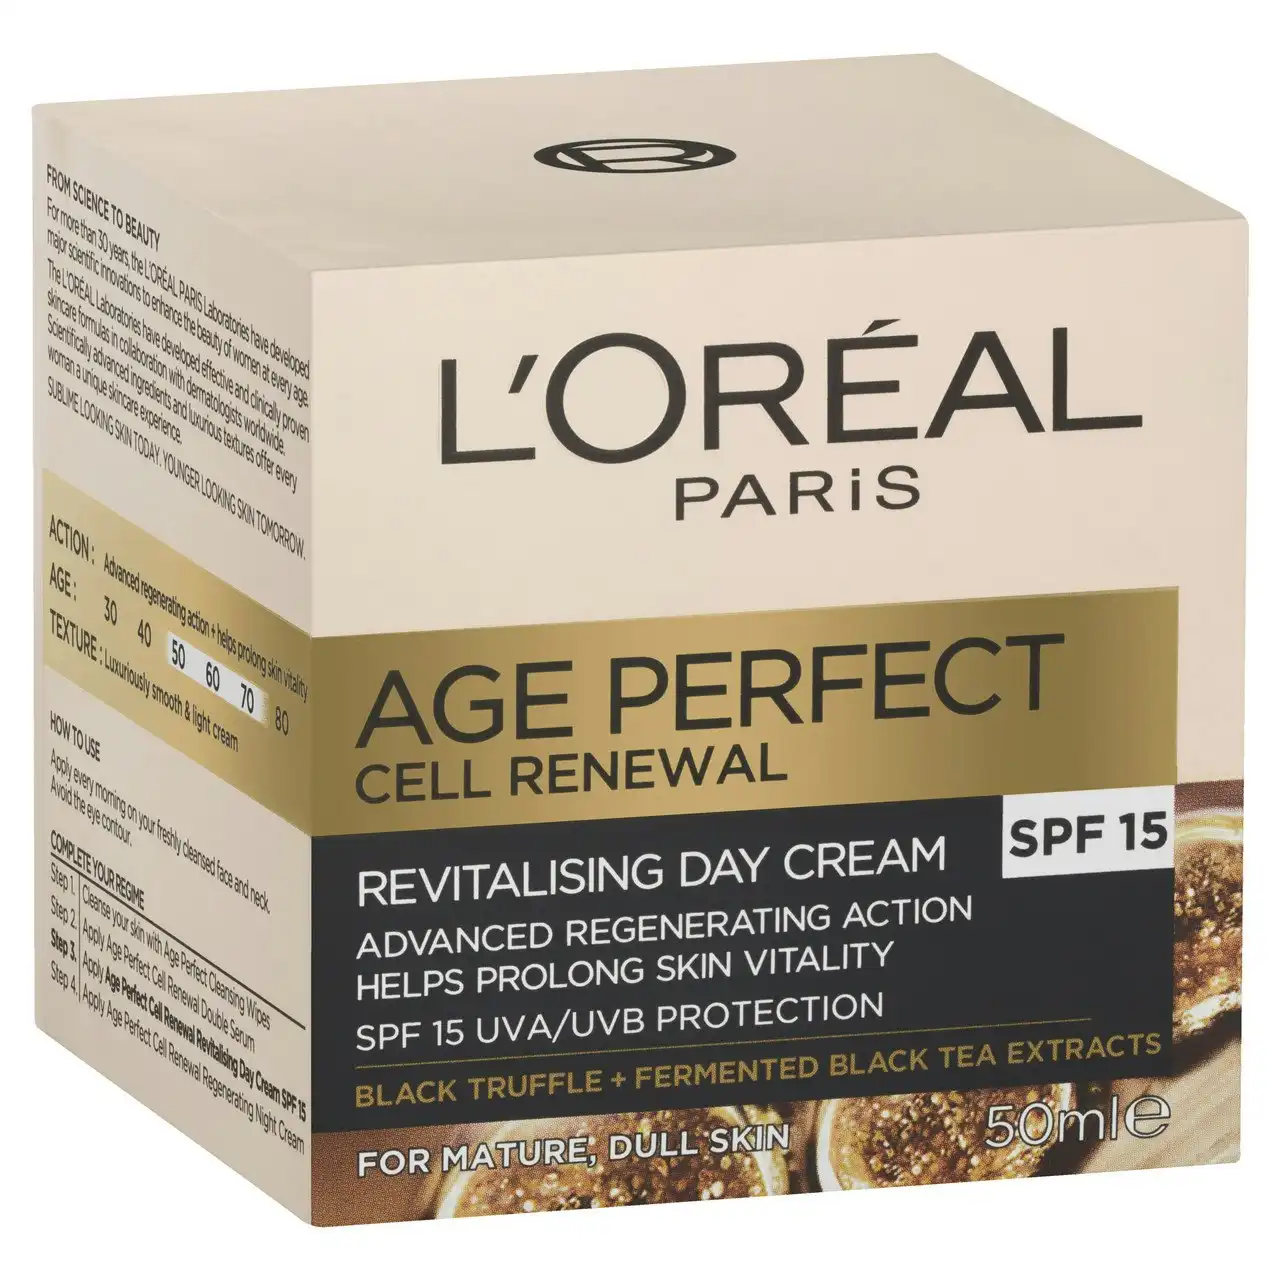 L'Oreal Paris Age Perfect Cell Renewal Revitalising SPF15 Day Cream